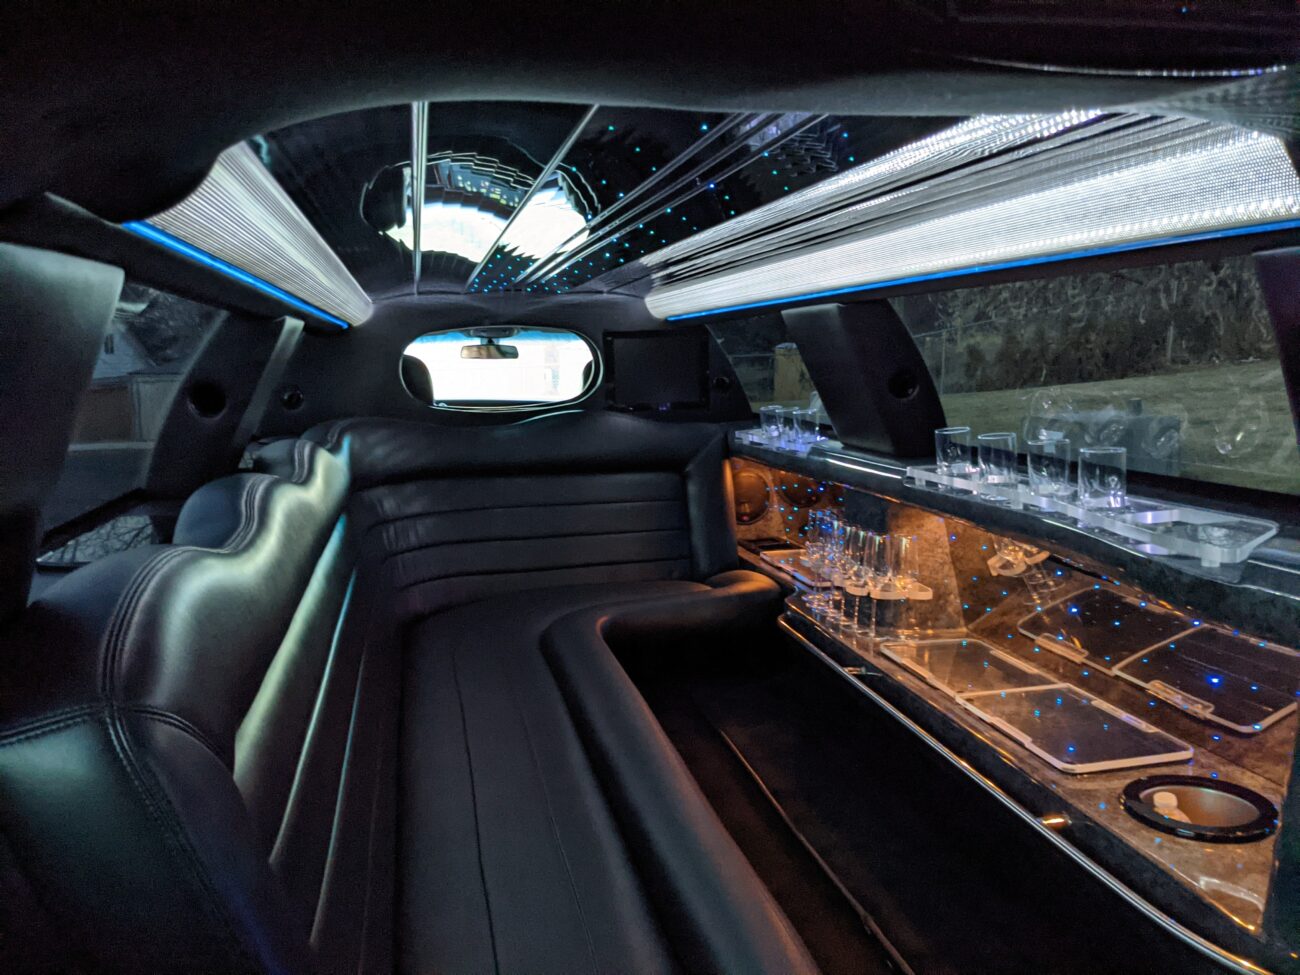 plush interior of a limo